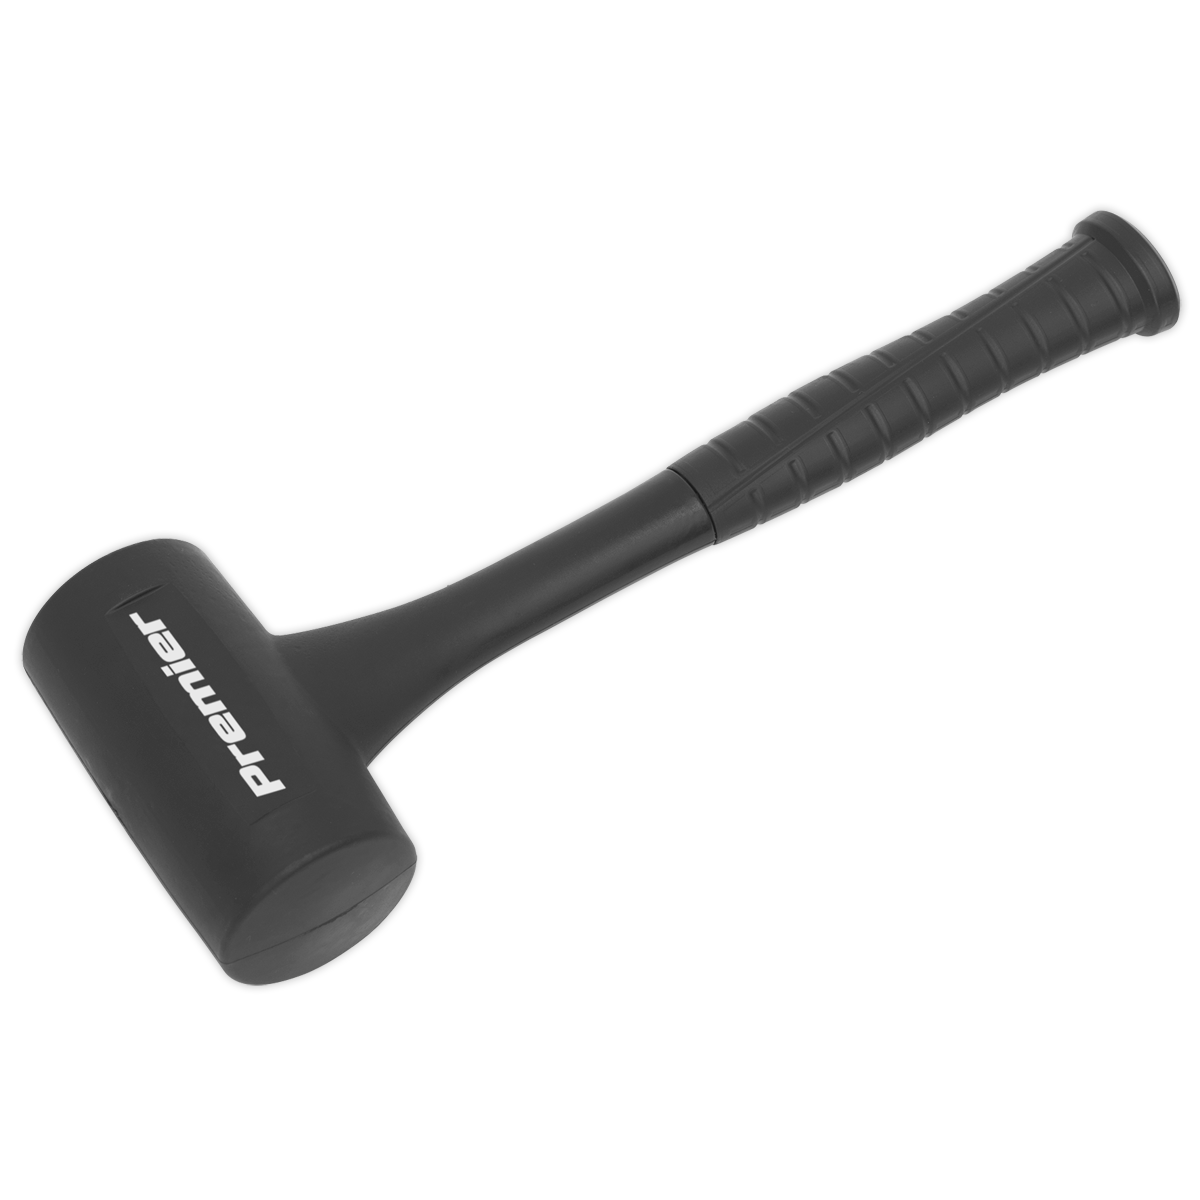 Dead Blow Hammer 2.2lb - DBH1000 - Farming Parts